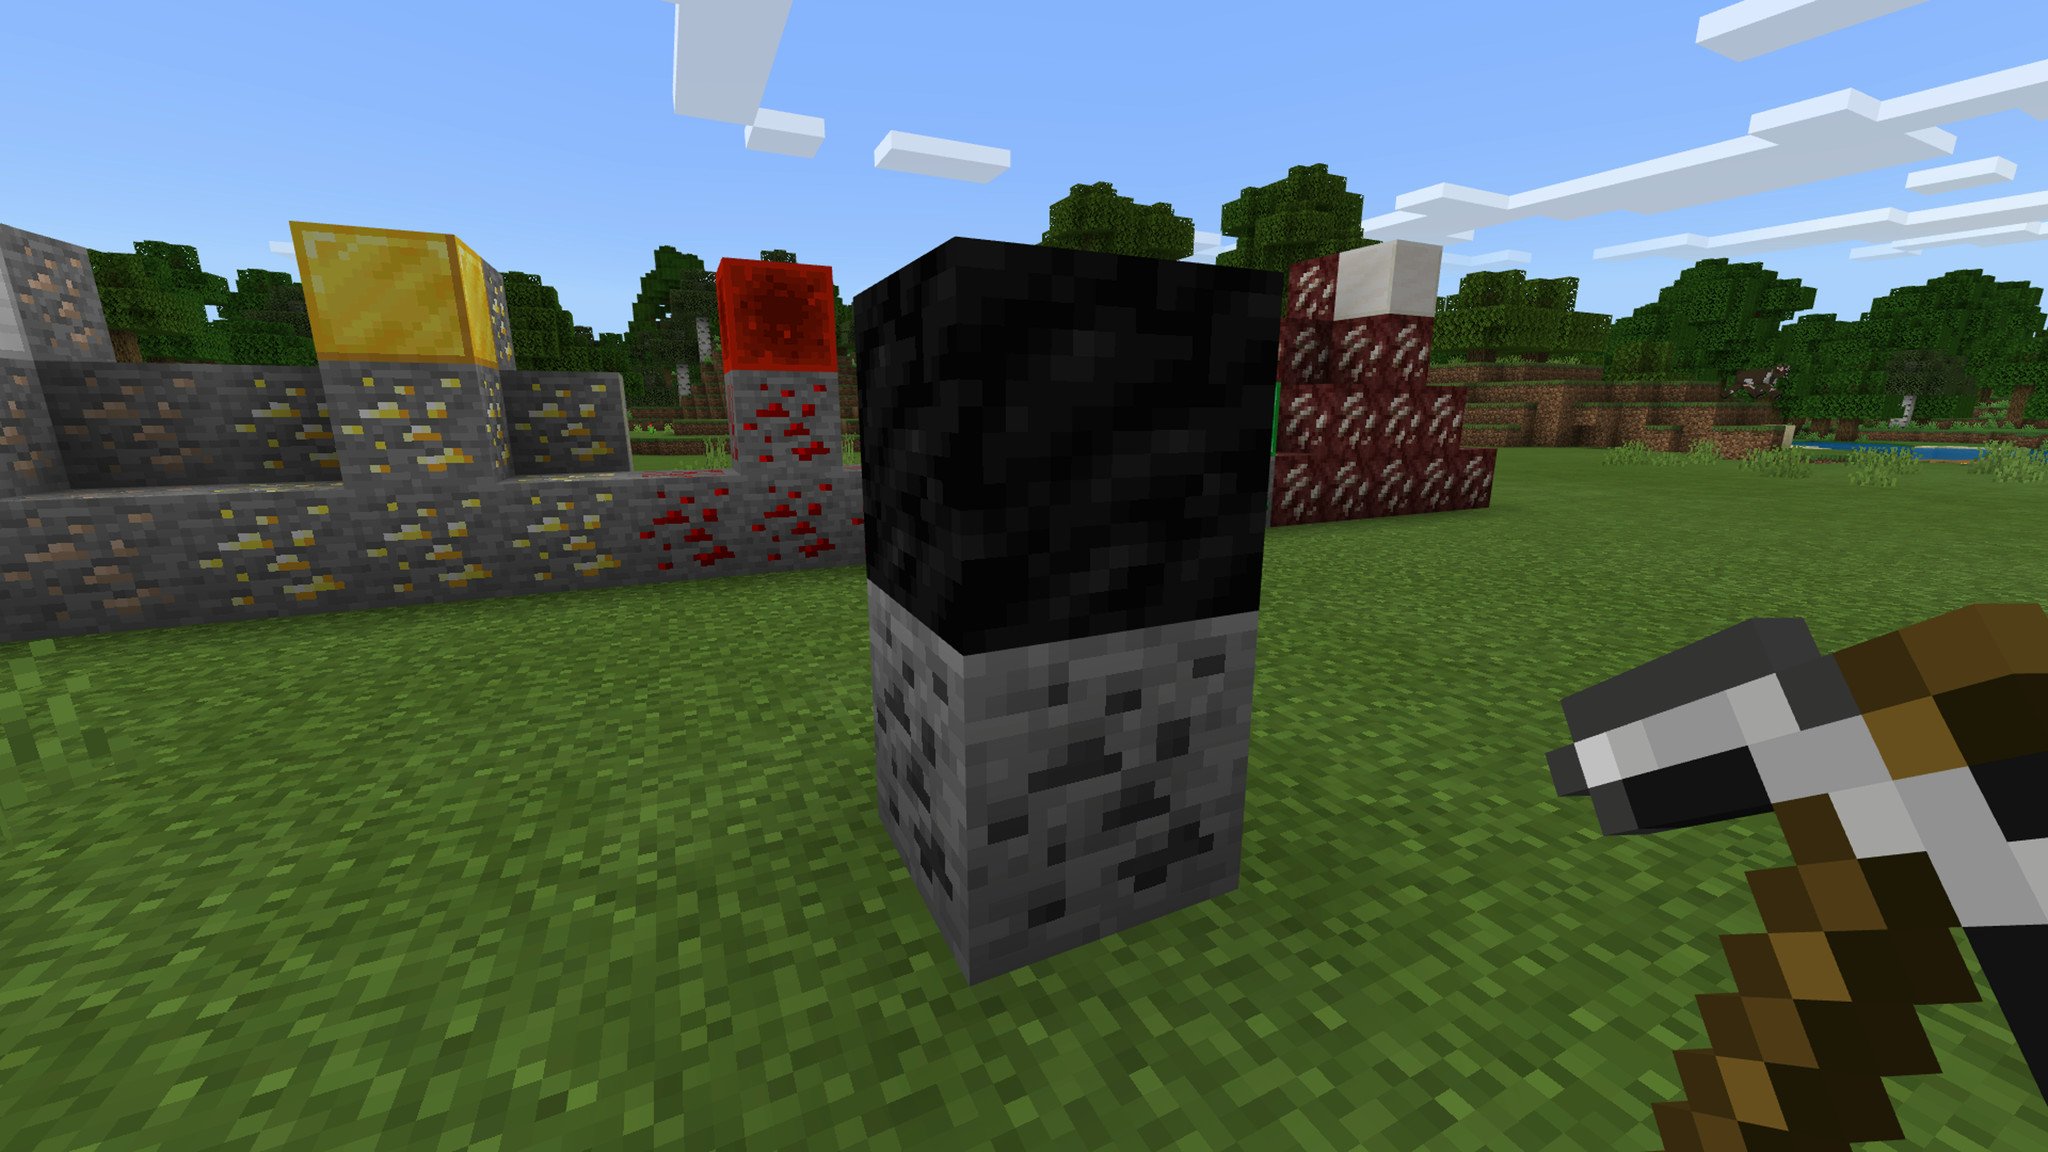 Some coal ore and a coal block